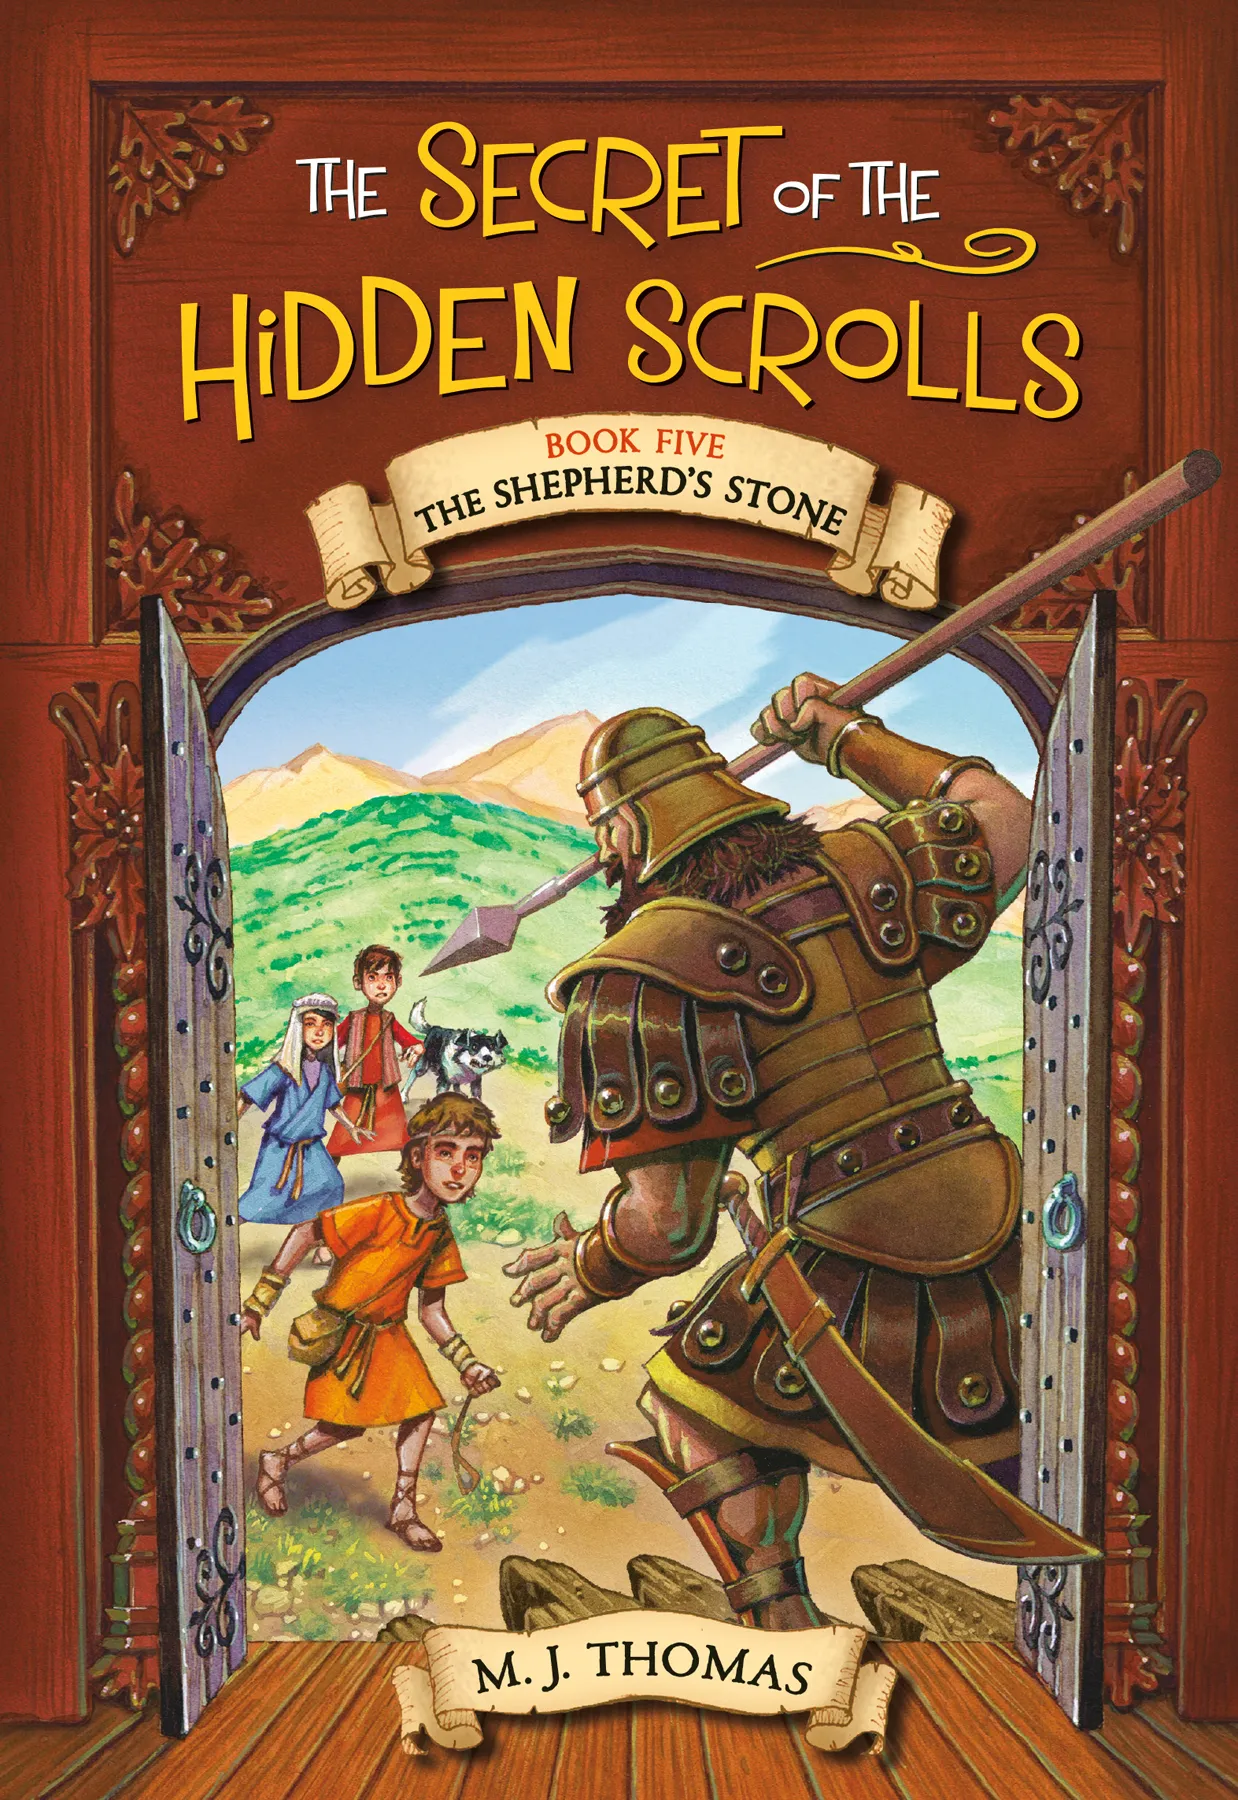 The Shepherd's Stone (The Secret of the Hidden Scrolls #5)